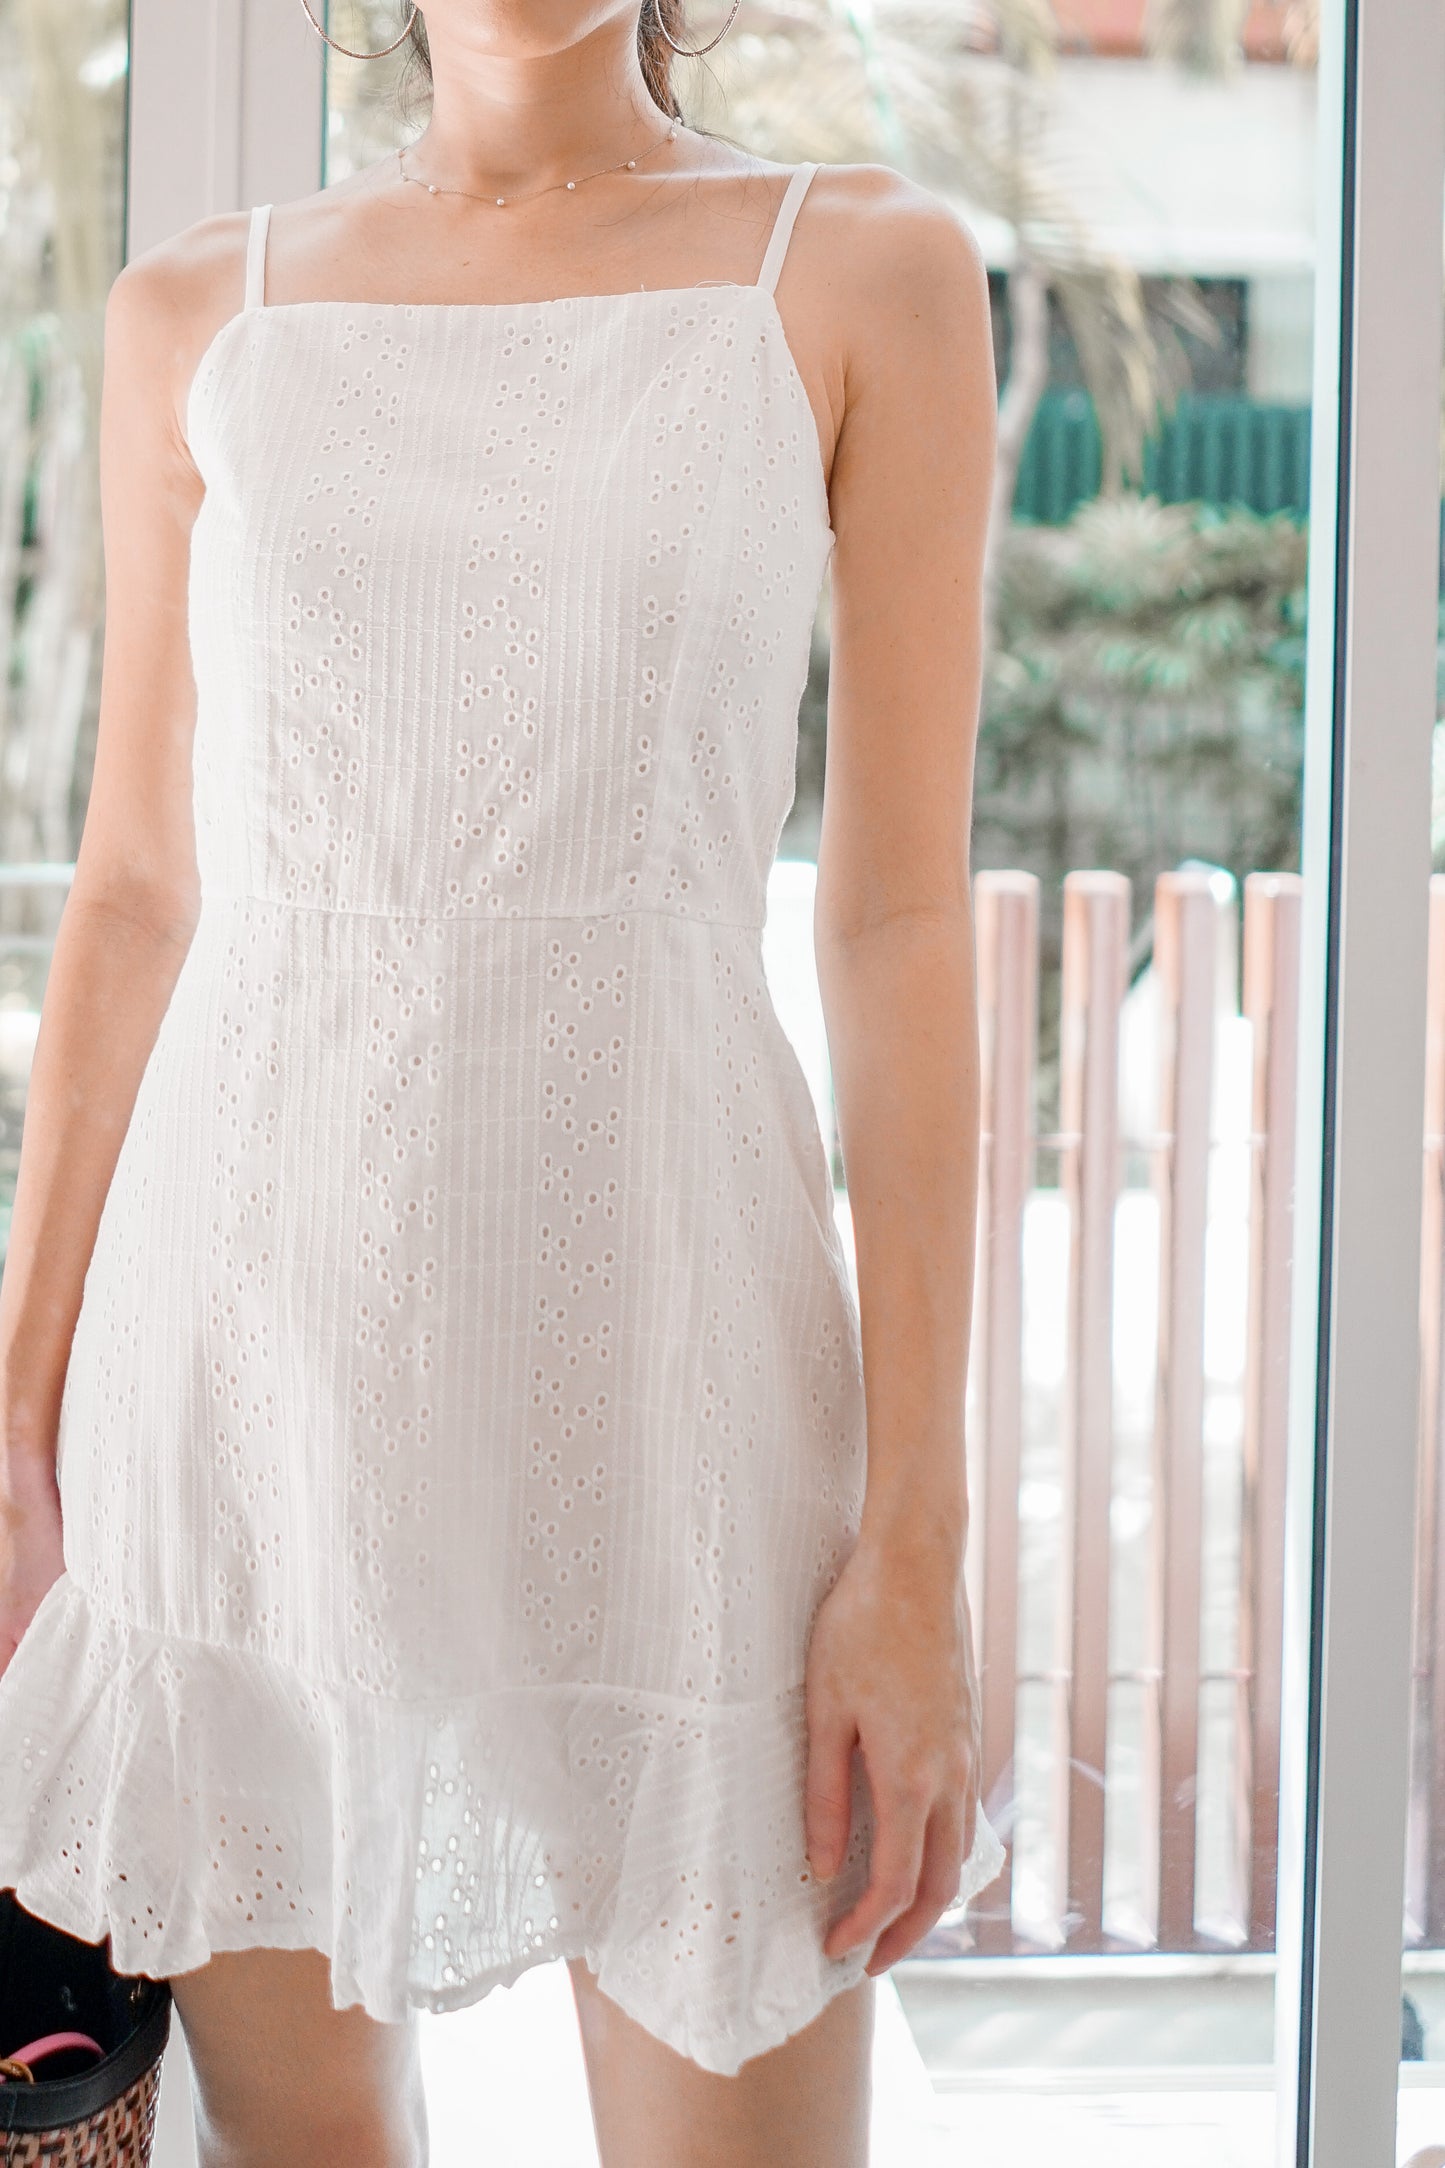 * PREMIUM * Arilia Crochet Dress Romper in White - Self Manufactured by LBRLABEL